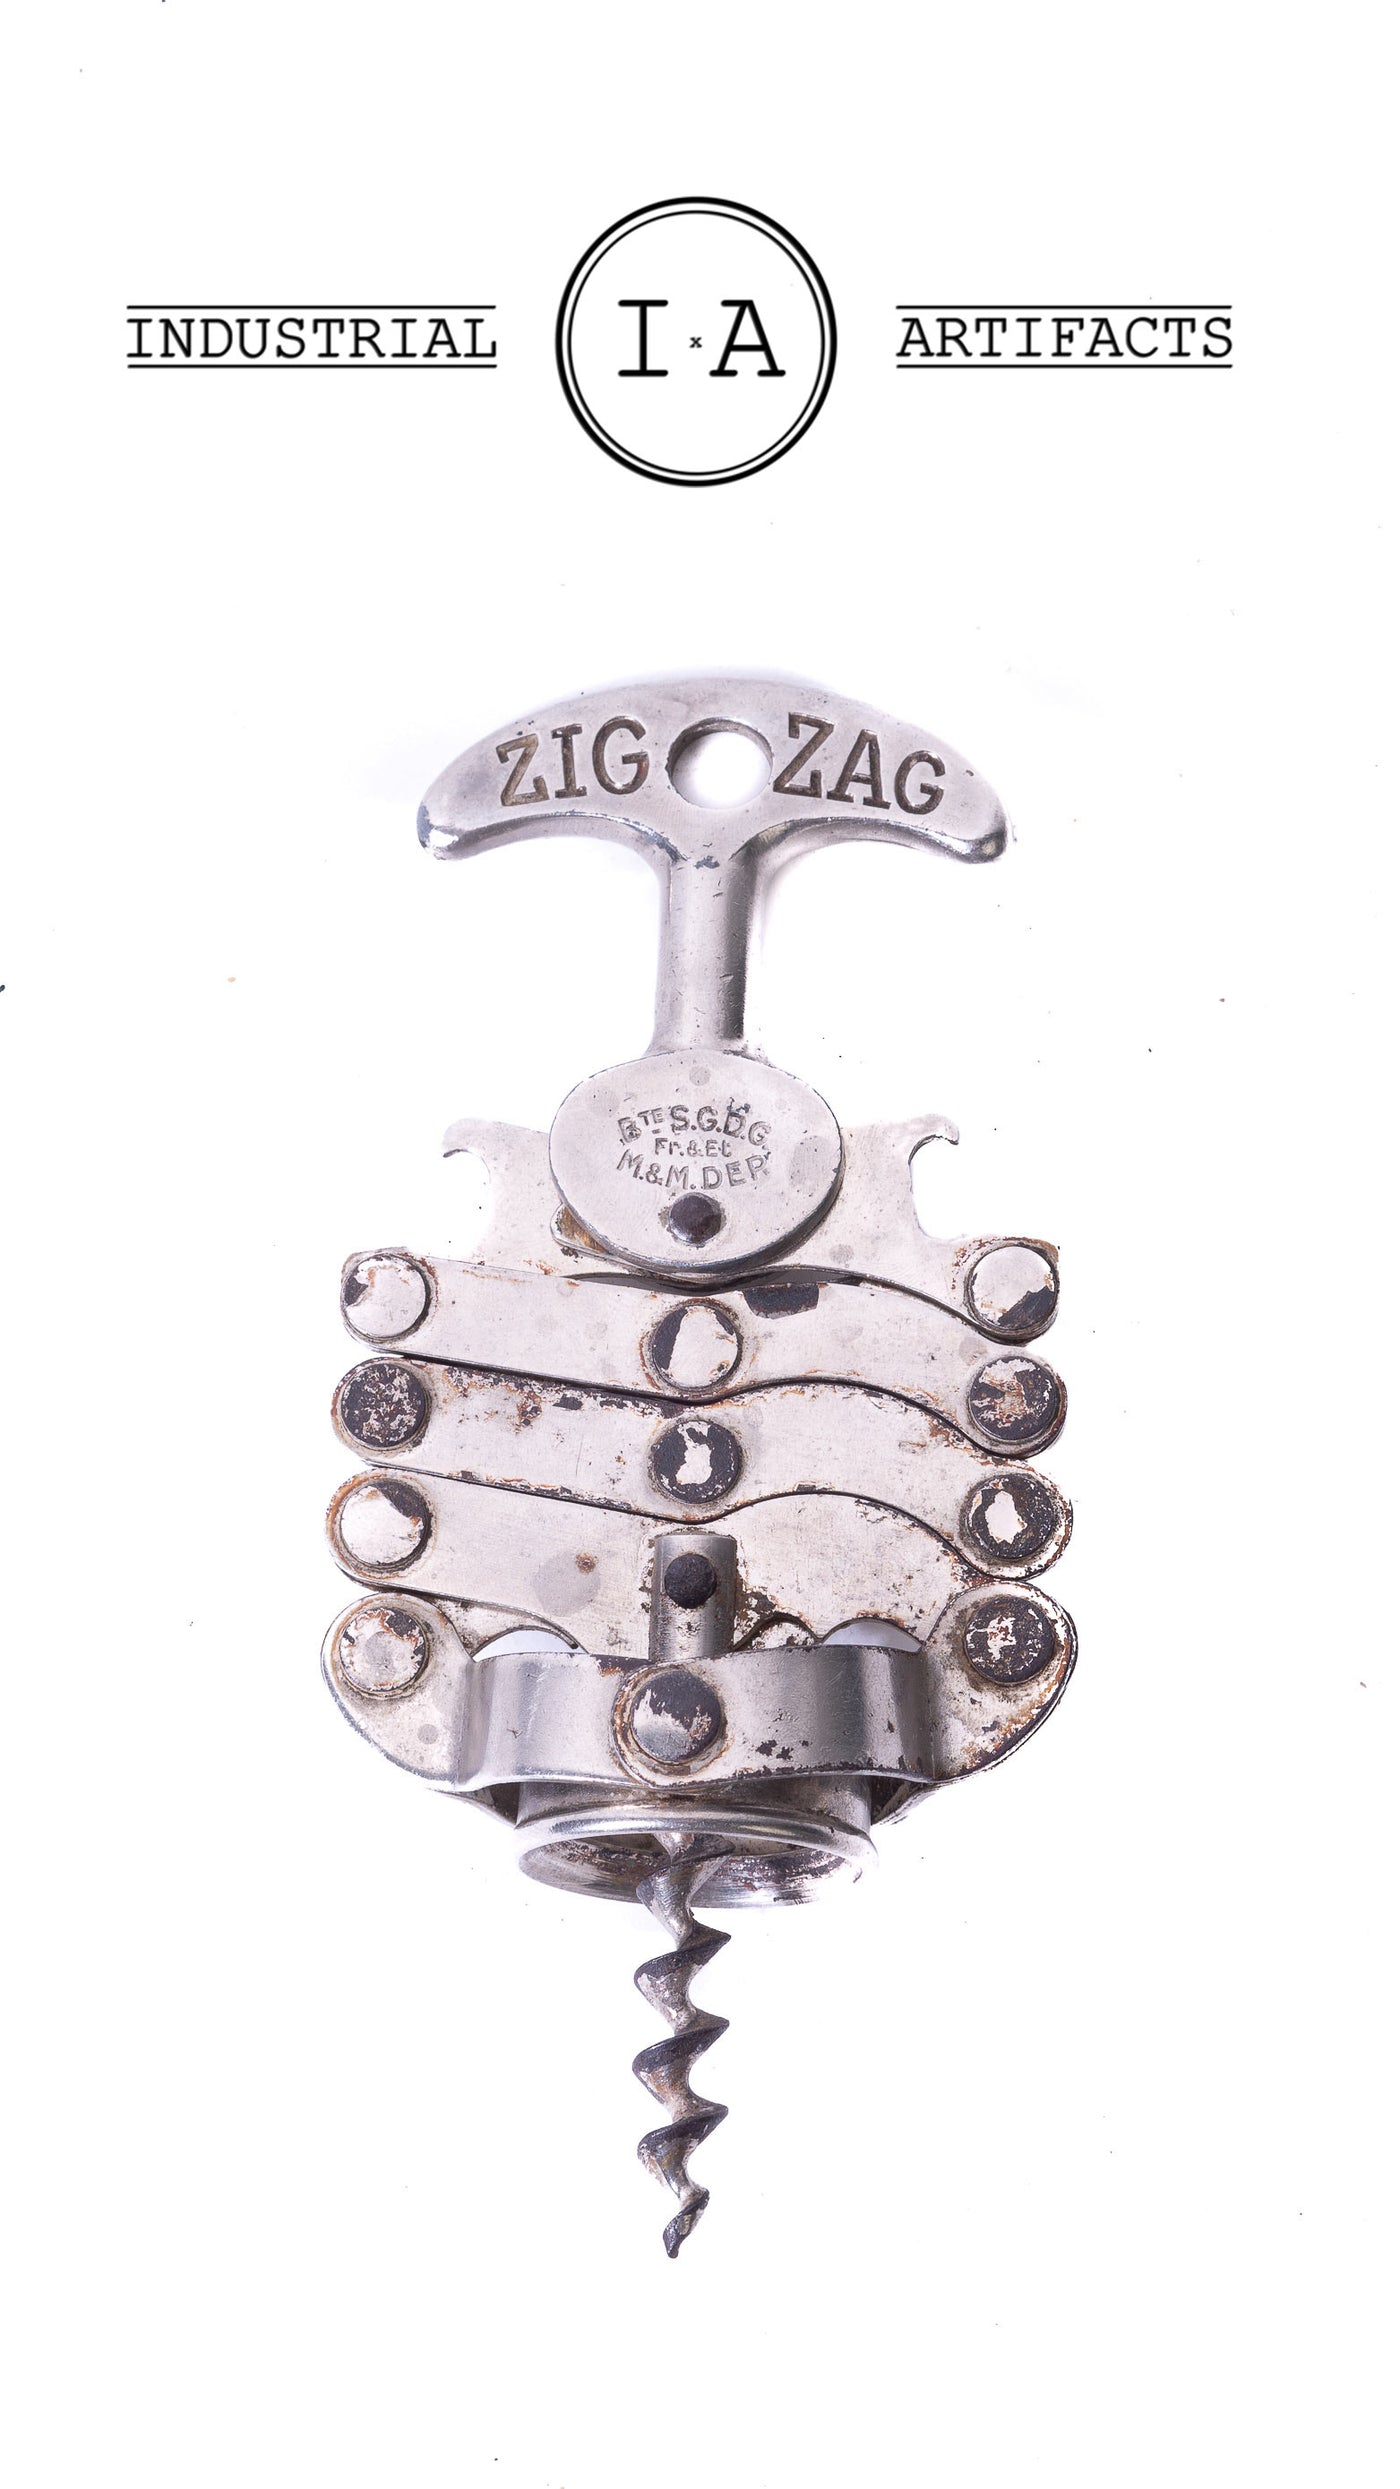 C. 1919 Zig Zag Corkscrew